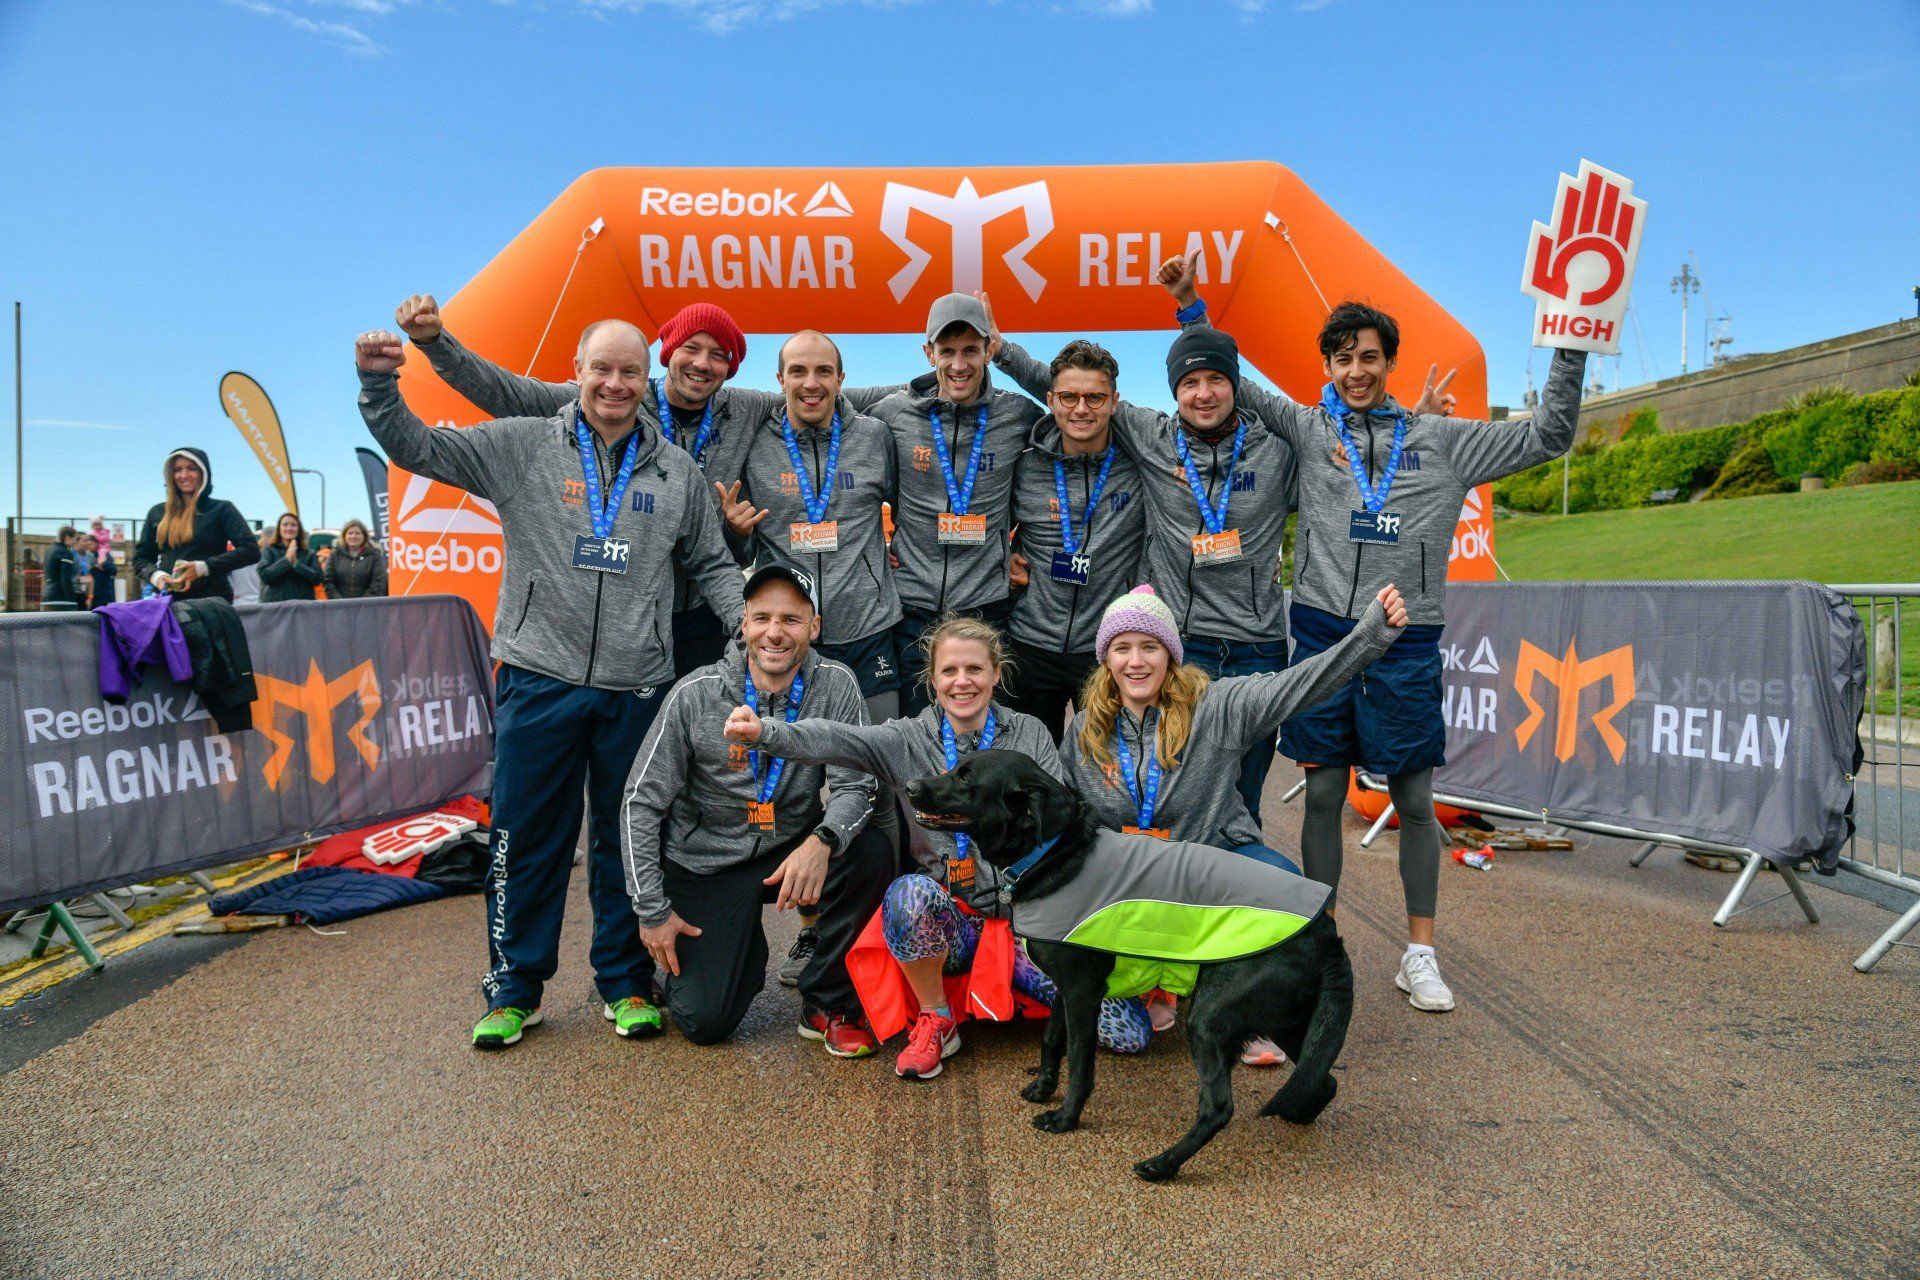 Ragnar Relay Race Weekend